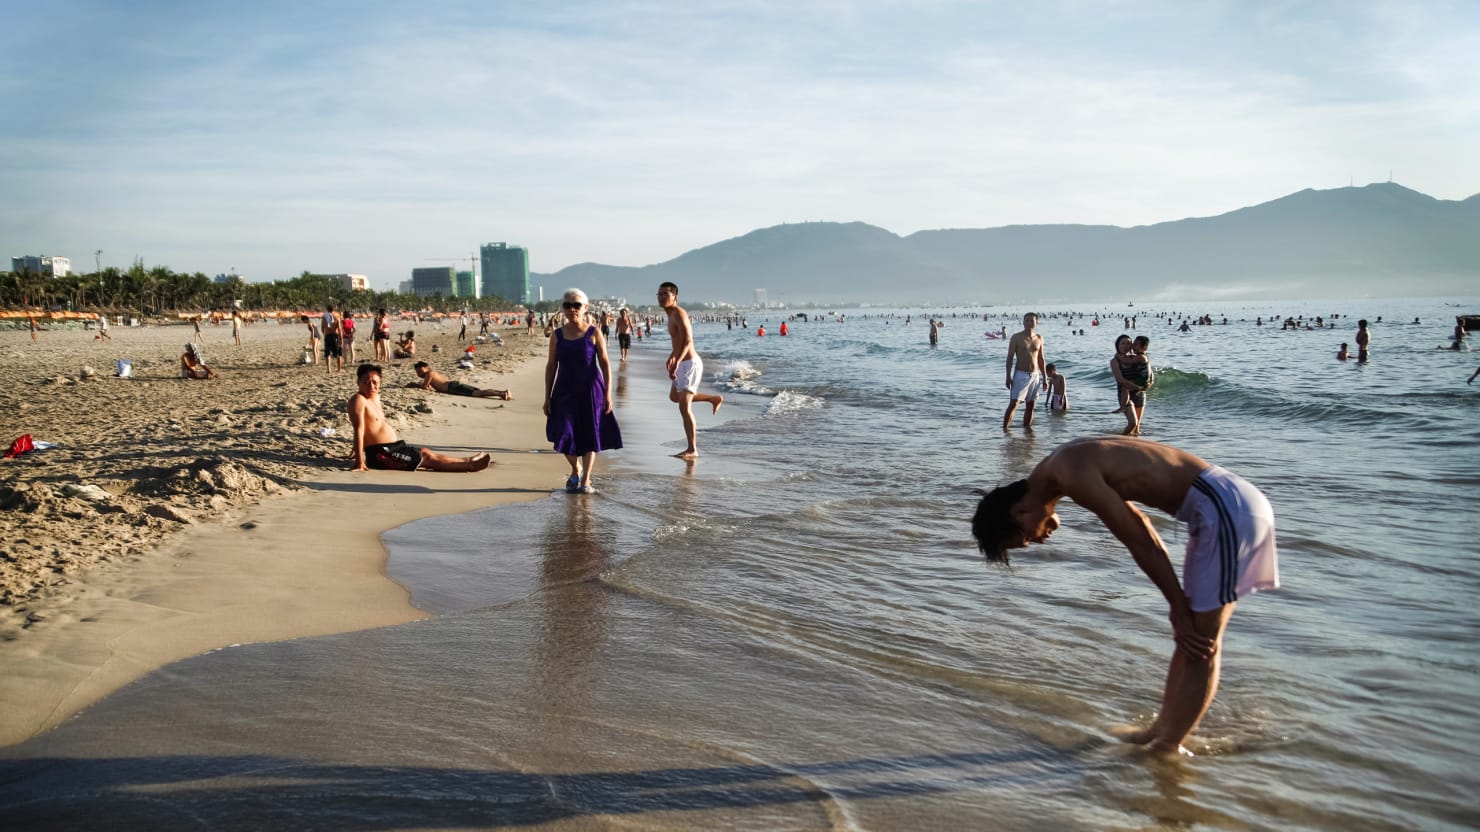 Beijing Closes In on Vietnams China Beach